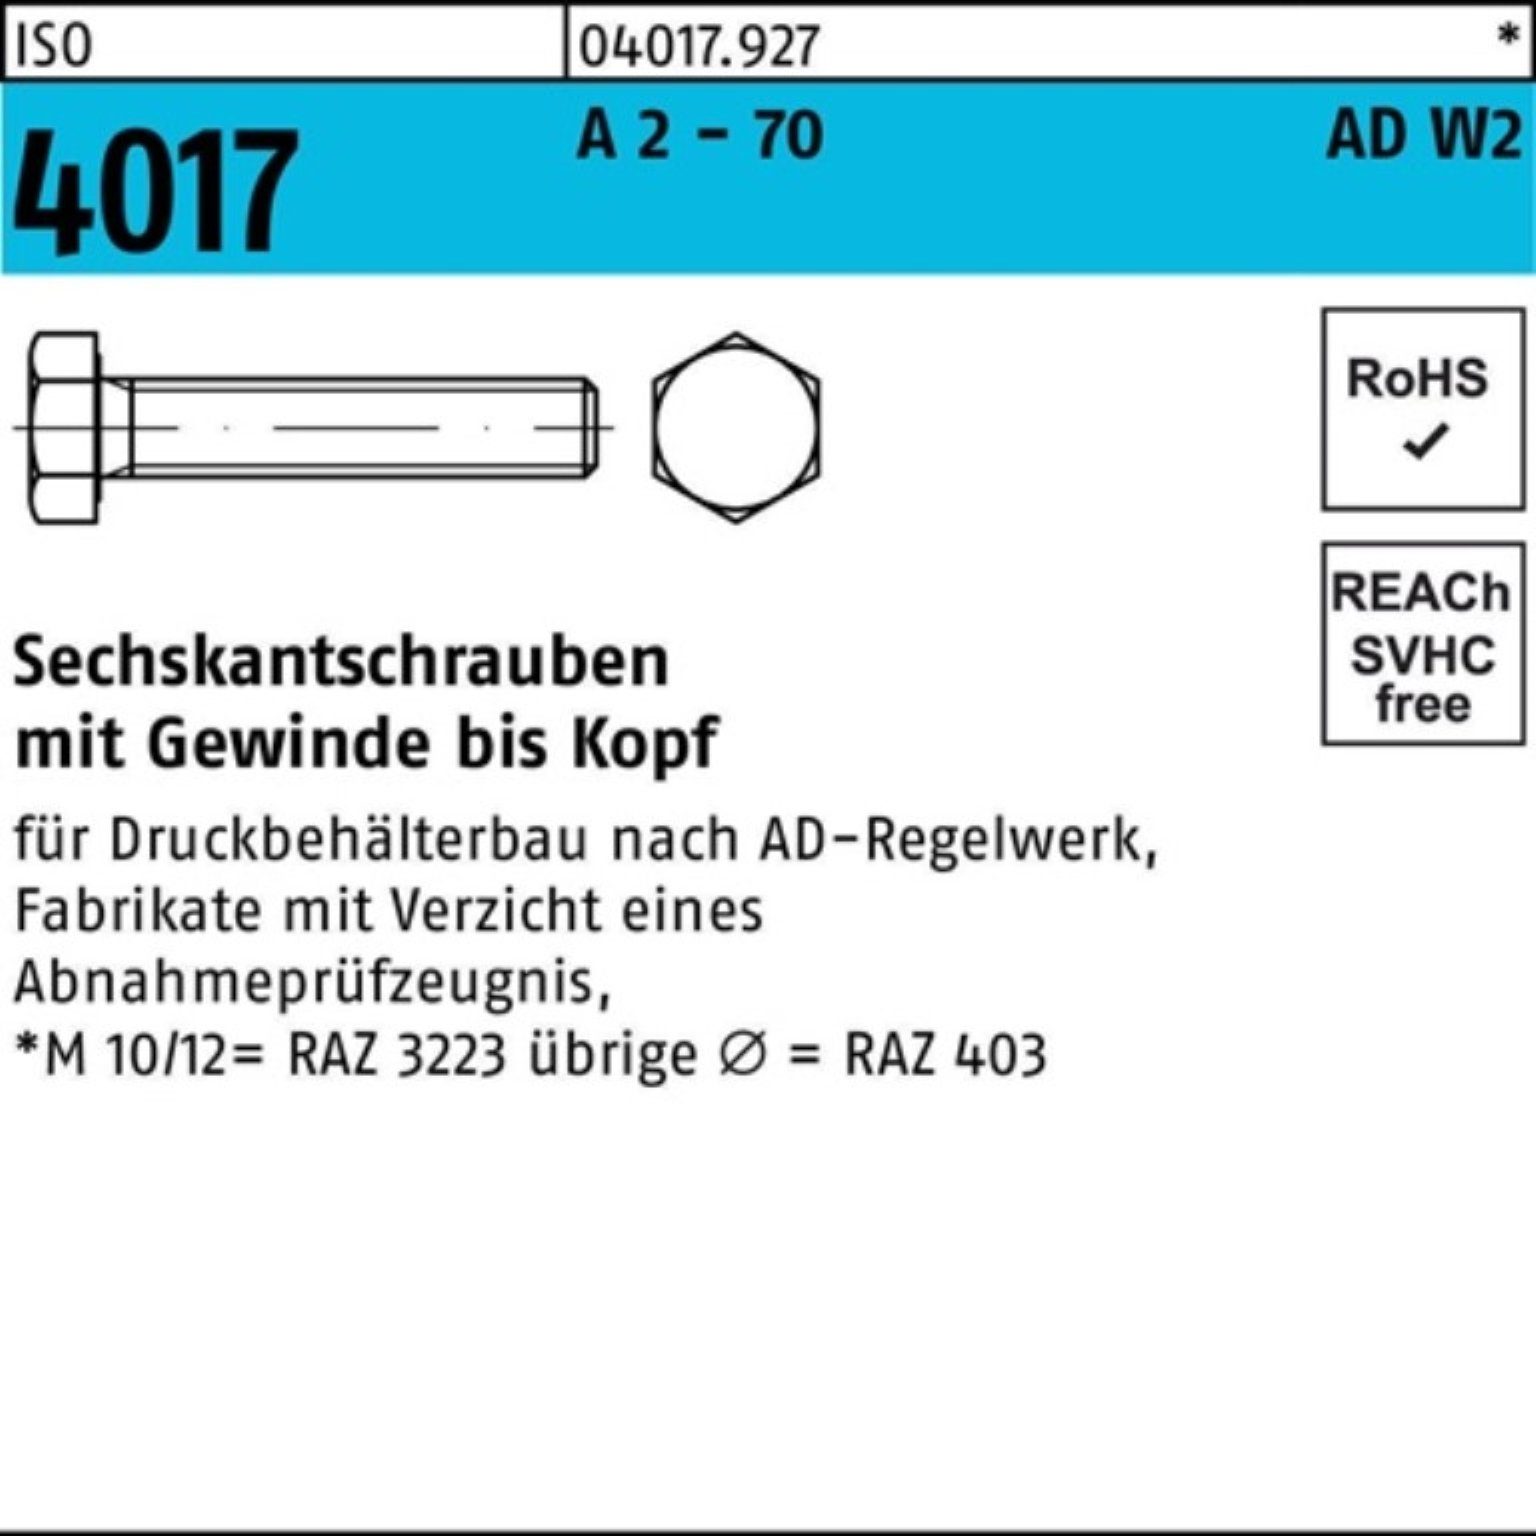 Bufab Sechskantschraube 100er Pack Sechskantschraube ISO 4017 VG M16x 60 A 2 - 70 AD-W2 25 St